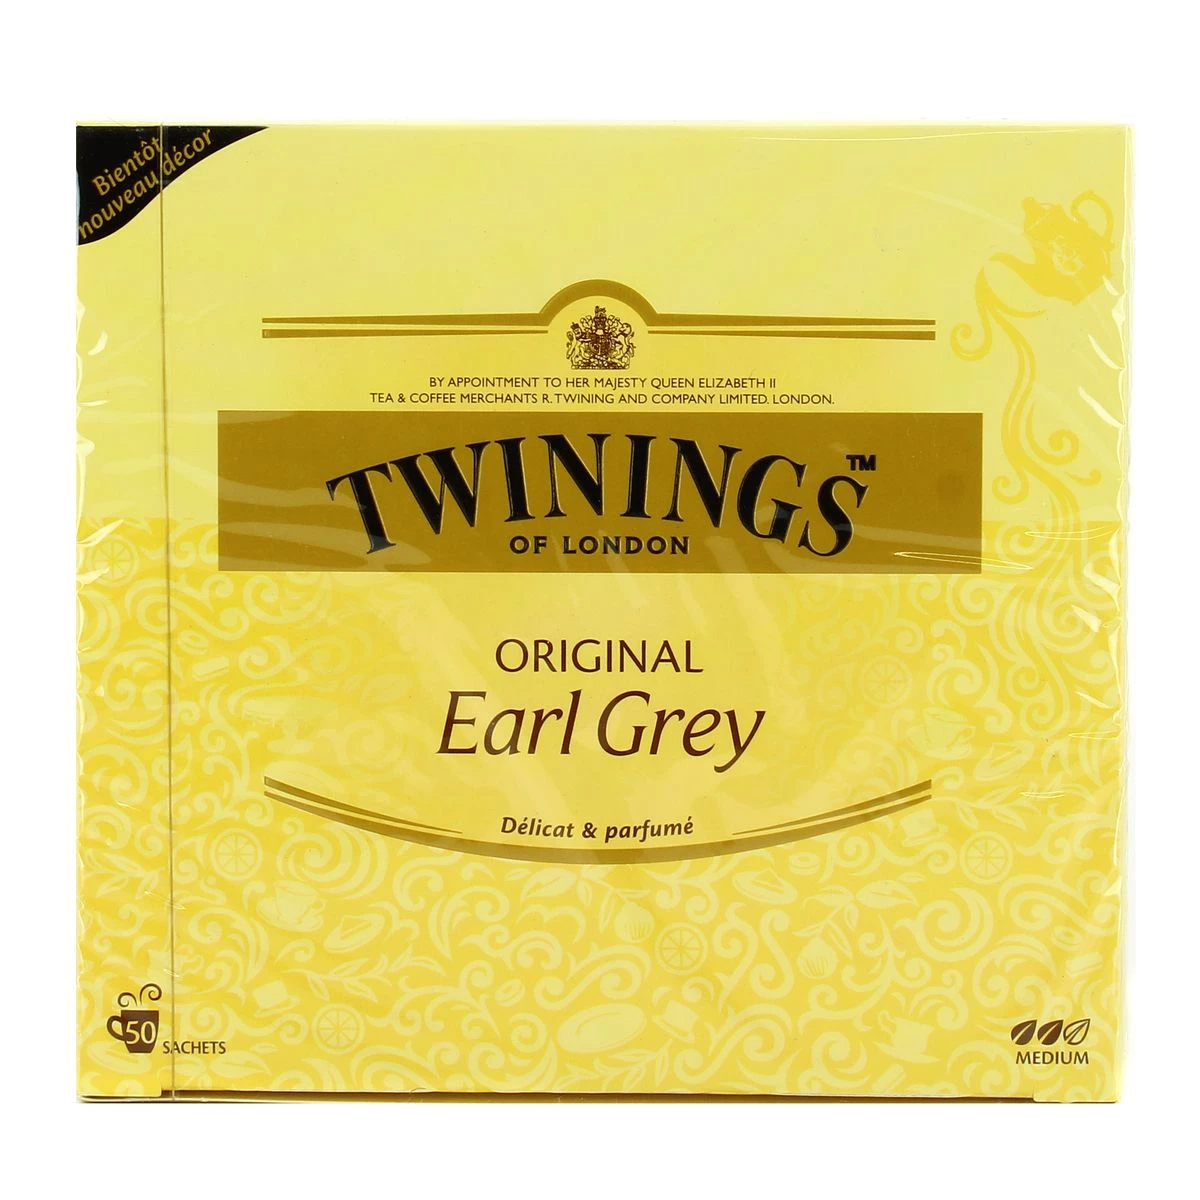 The original Earl Grey x50 100g - TWININGS